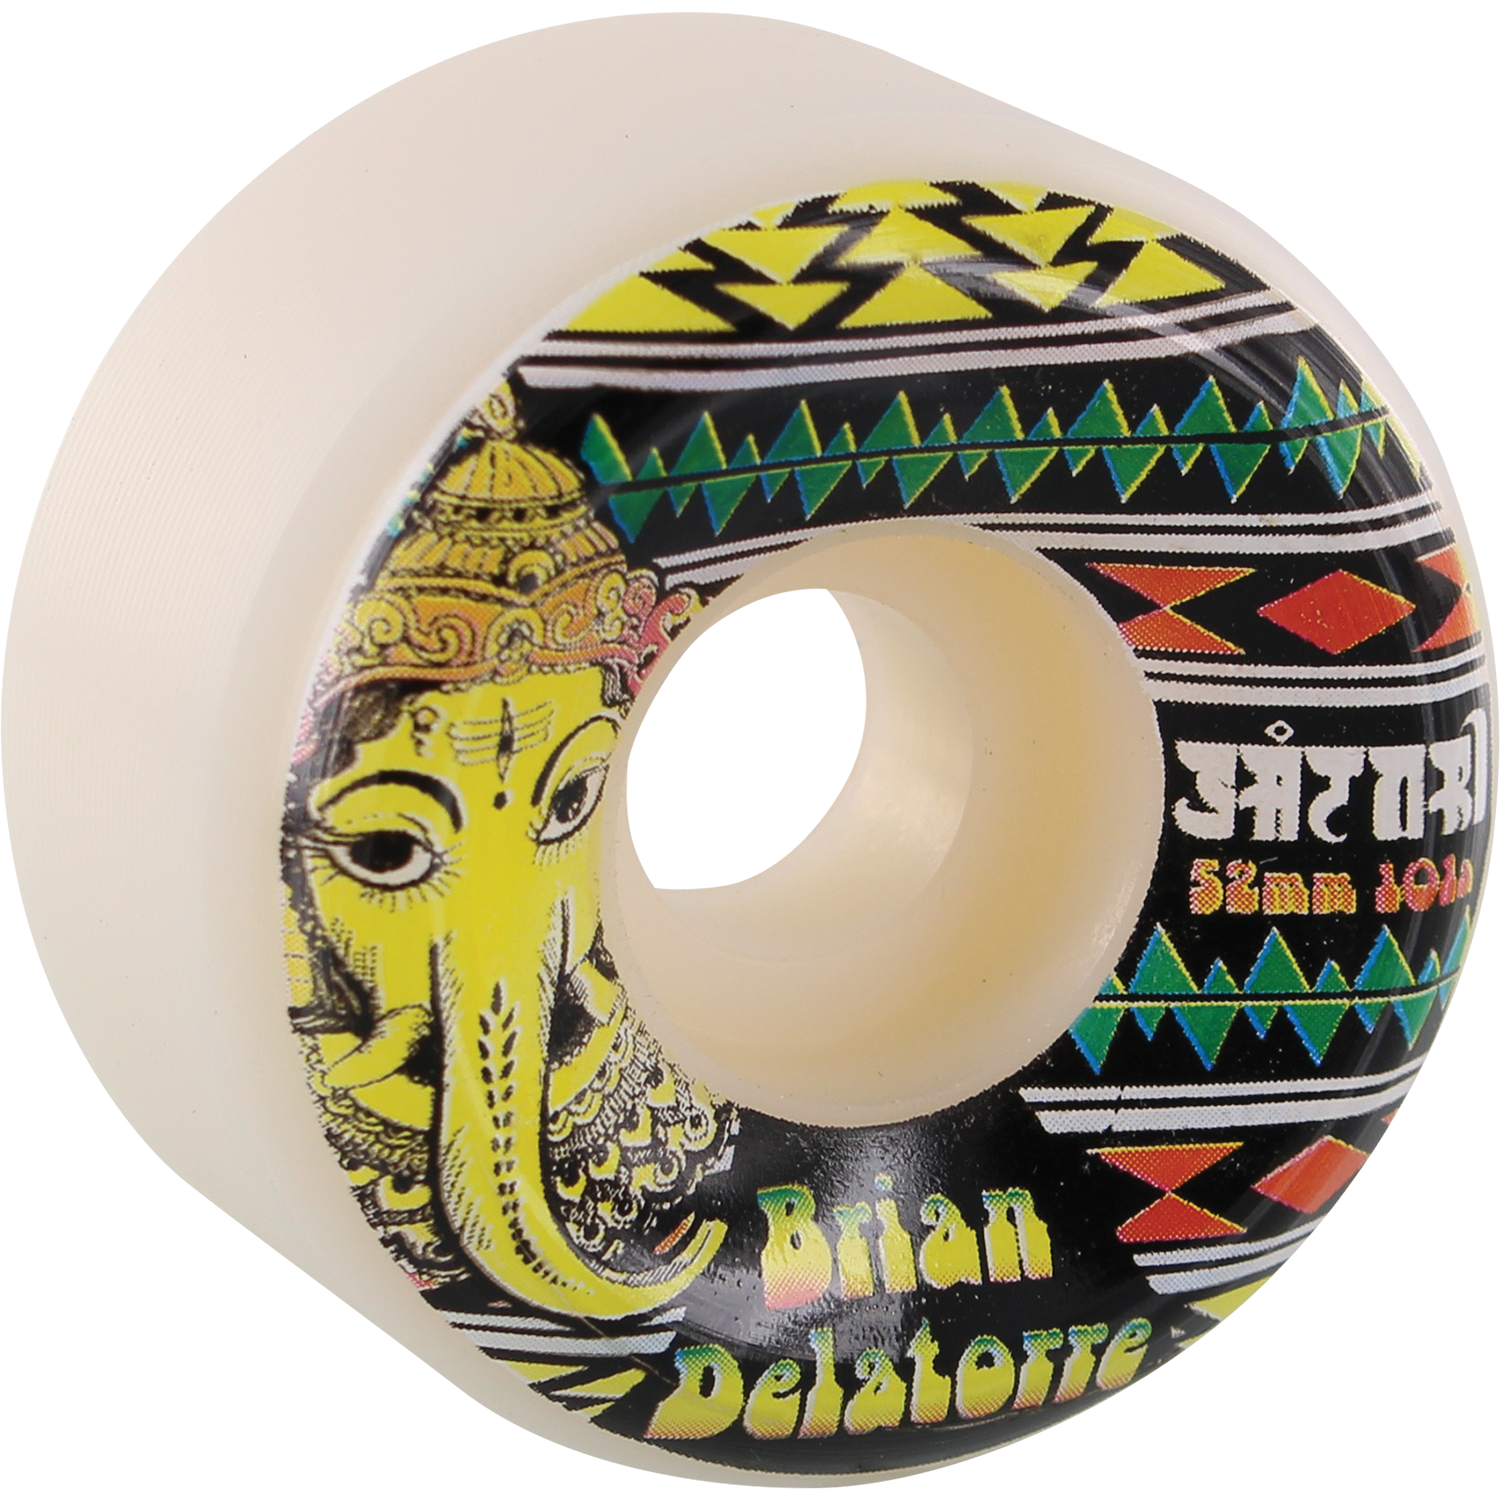 Satori Delatorre Ganesh 52mm 101a White Skateboard Wheels (Set of 4)